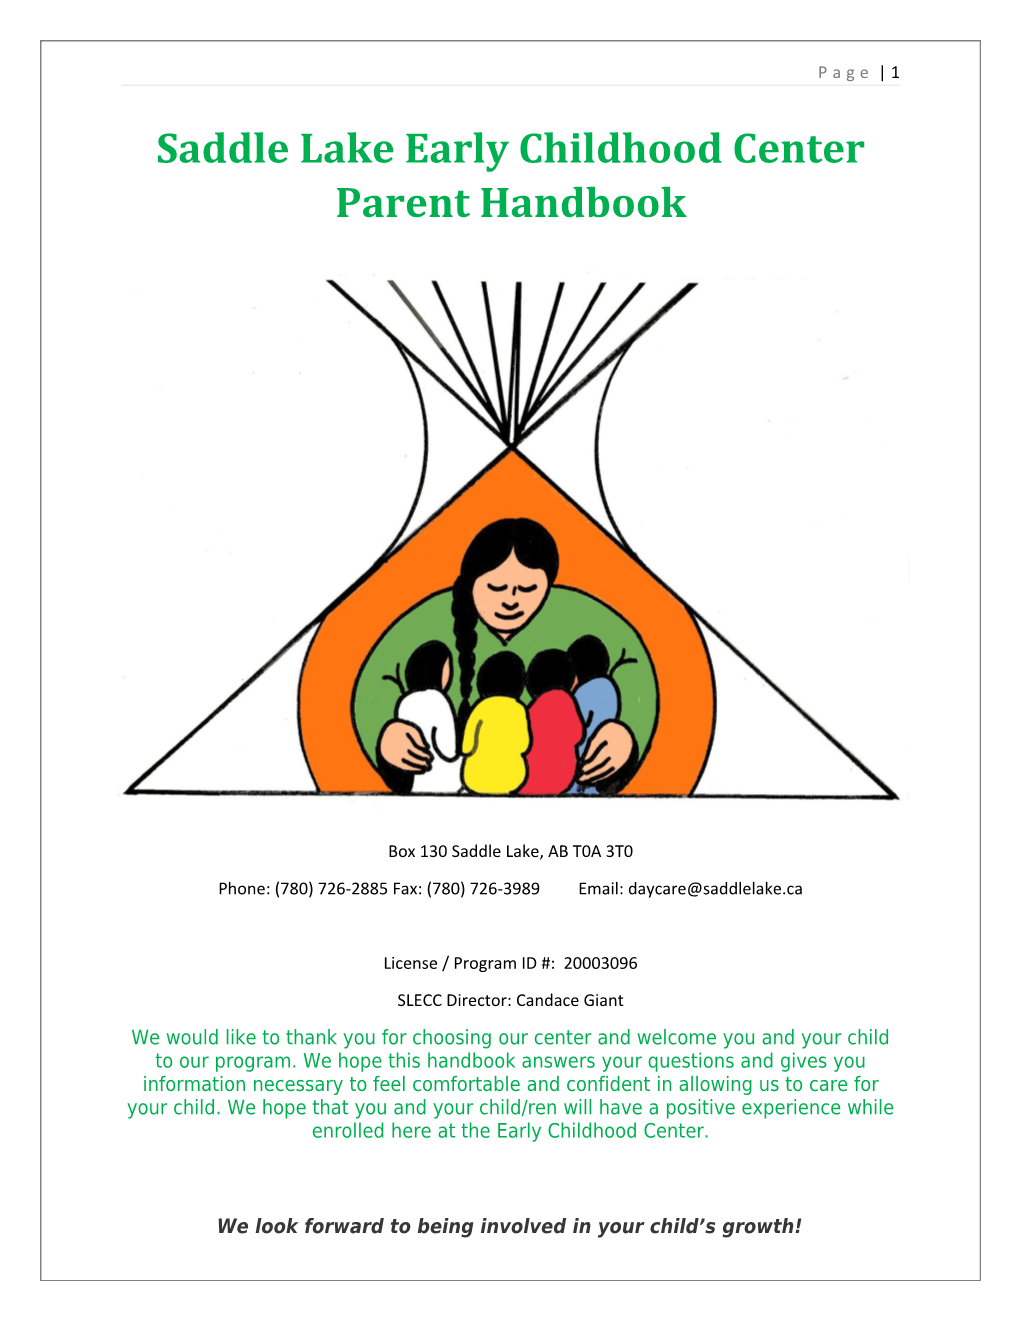 Saddle Lake Early Childhood Center Parent Handbook